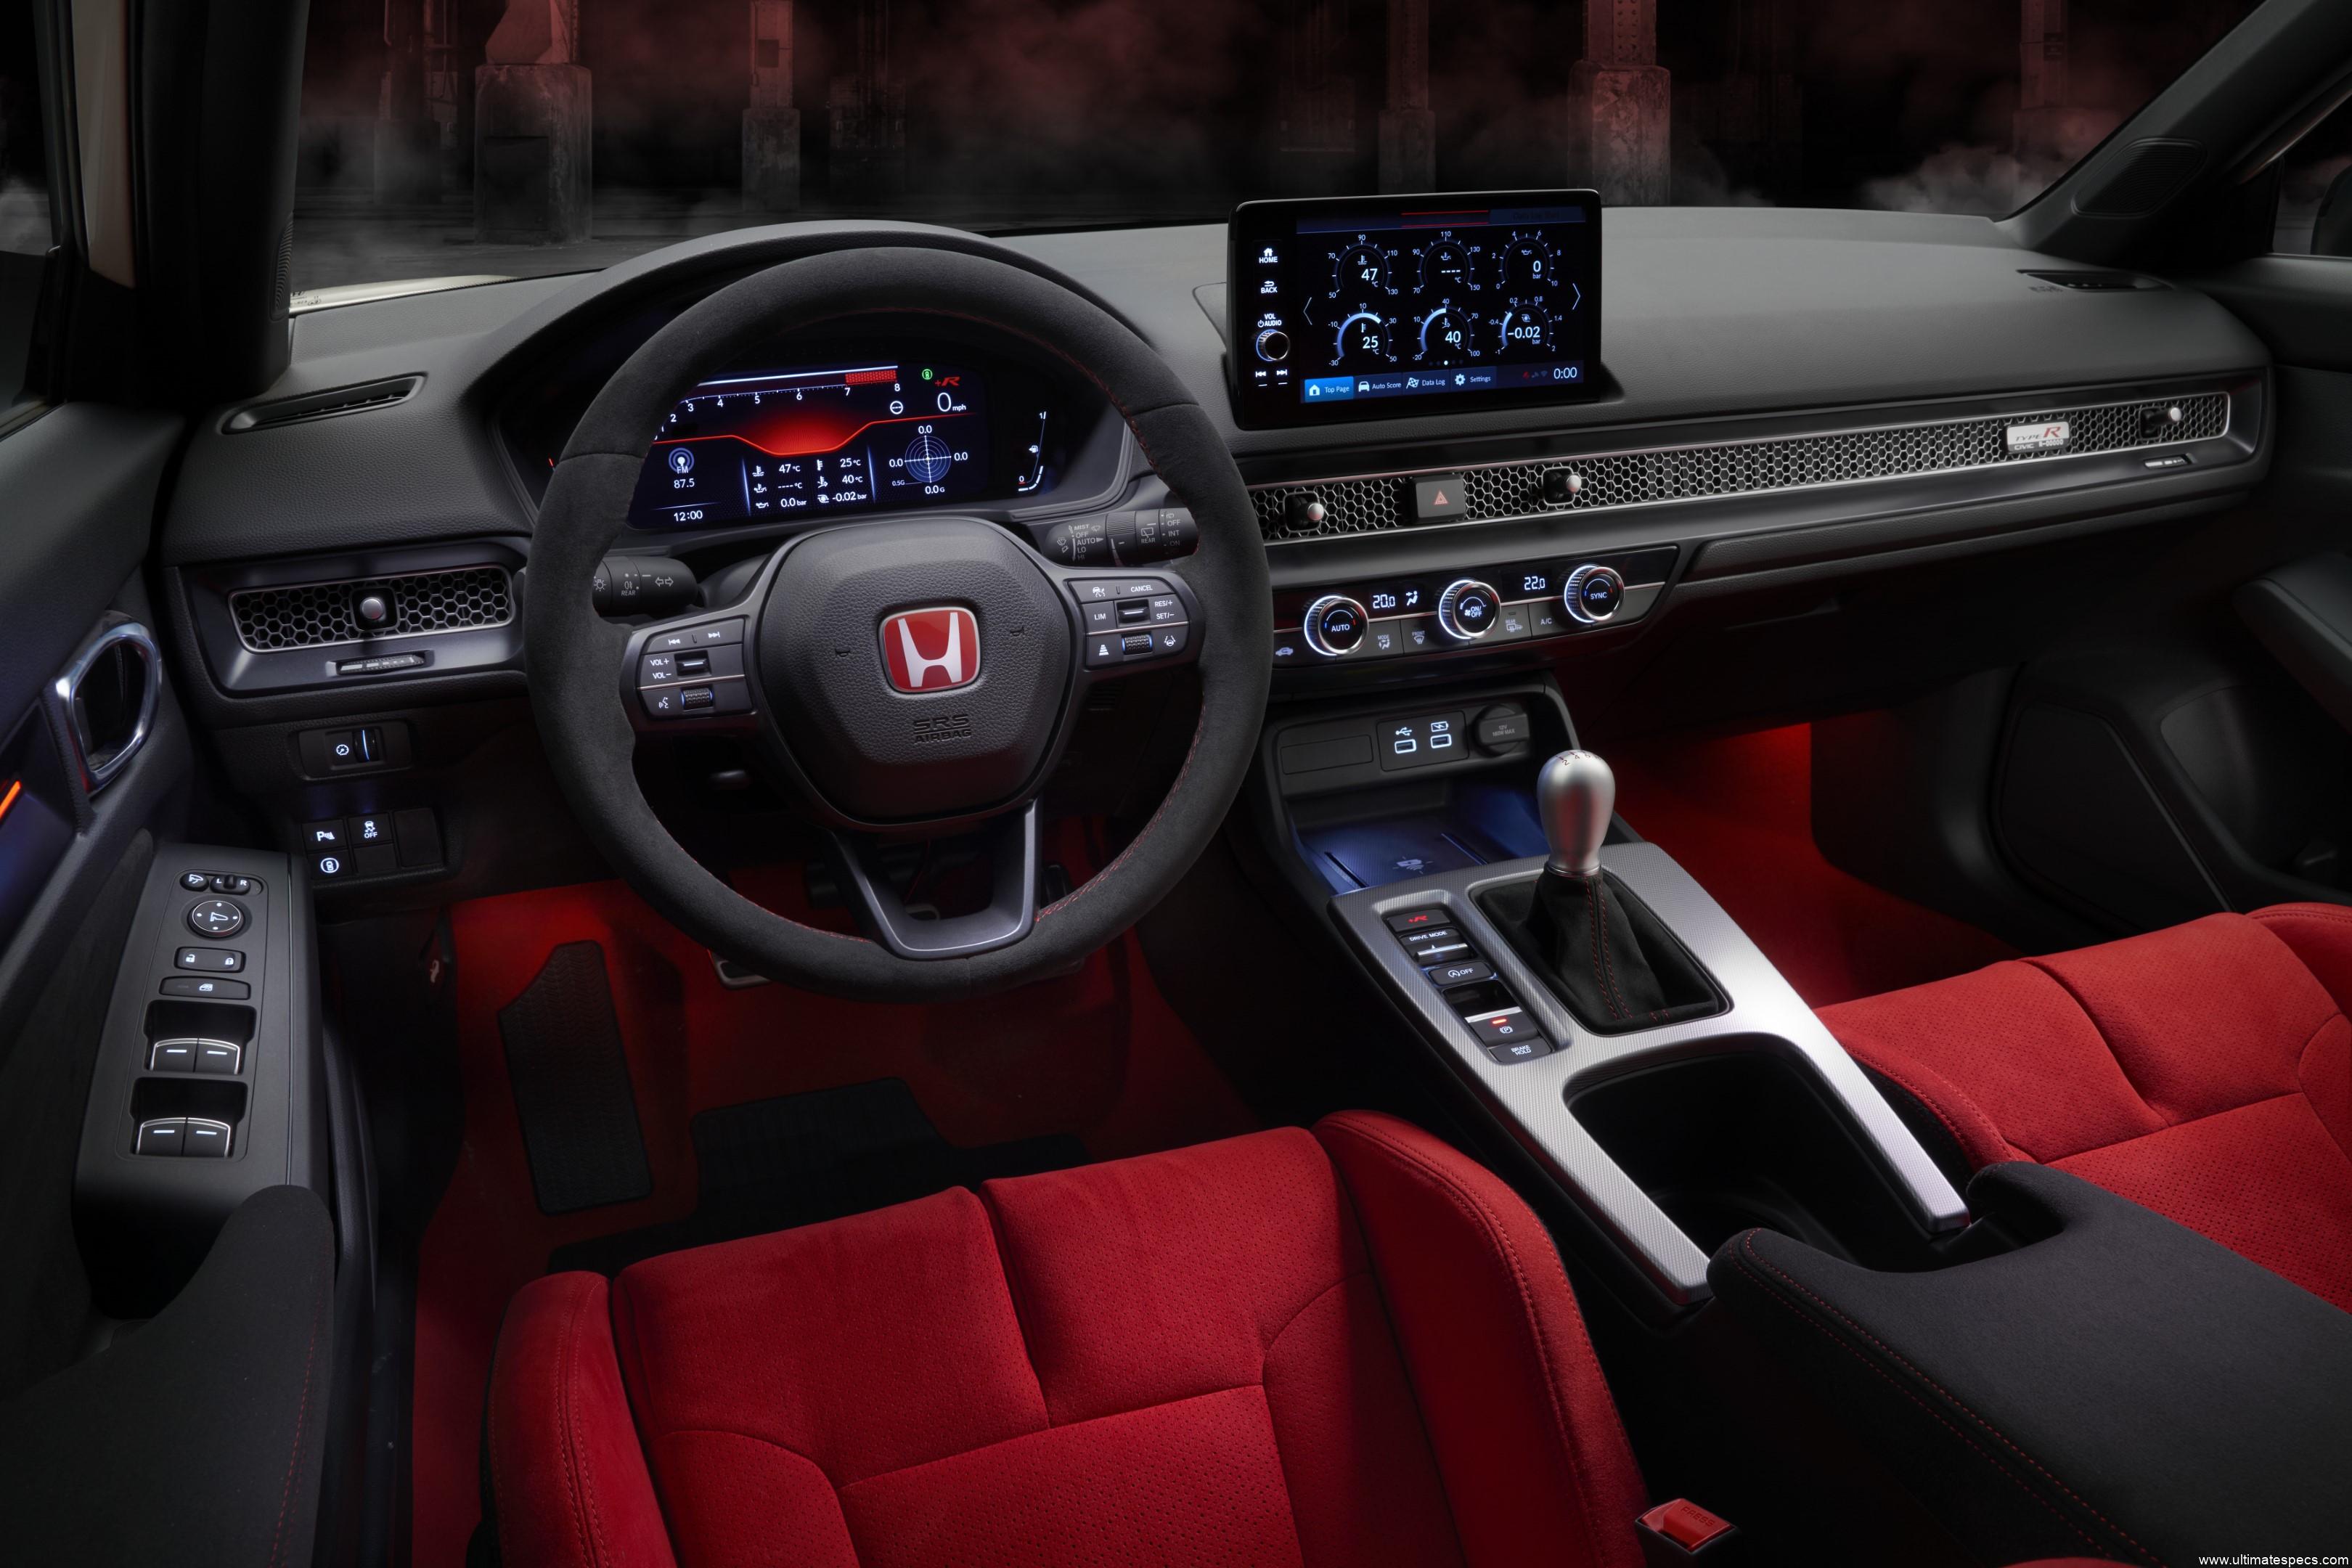 Honda Civic Hatchback 2023